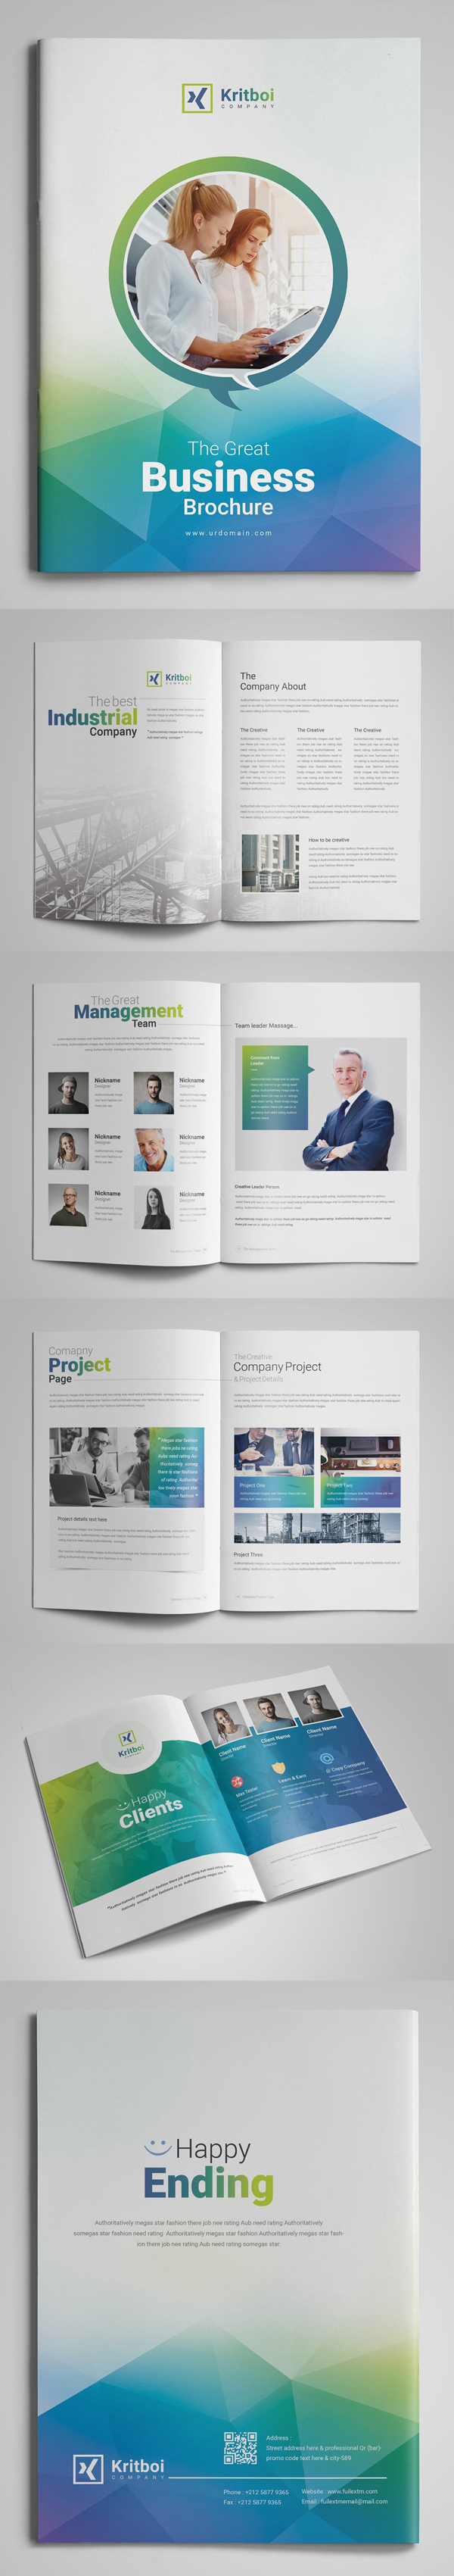 100 Professional Corporate Brochure Templates - 51